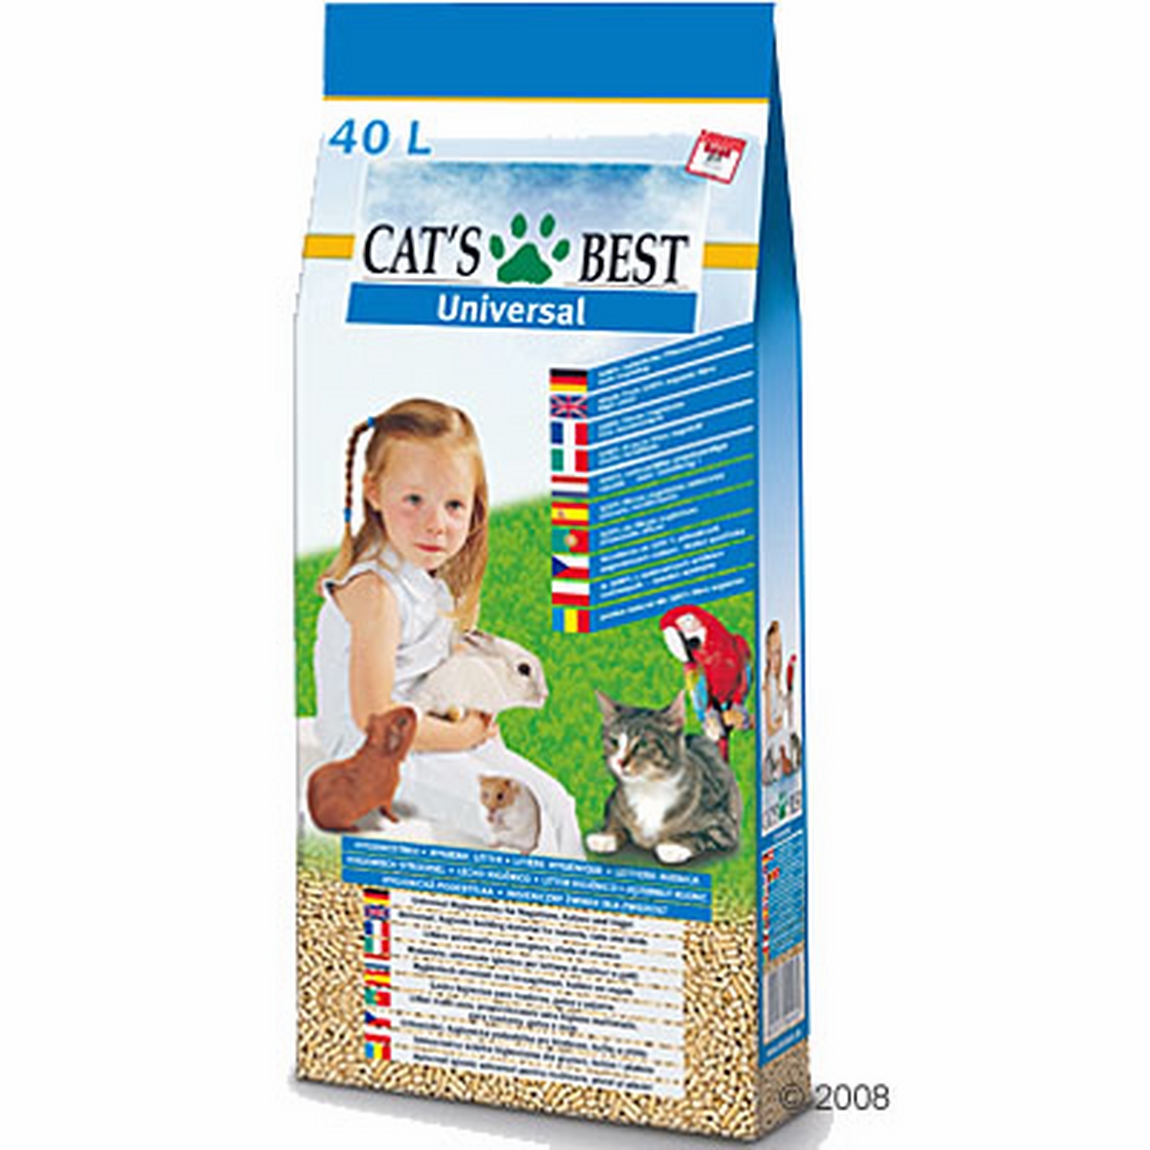 Cat’s Best Universal 40 L petmart